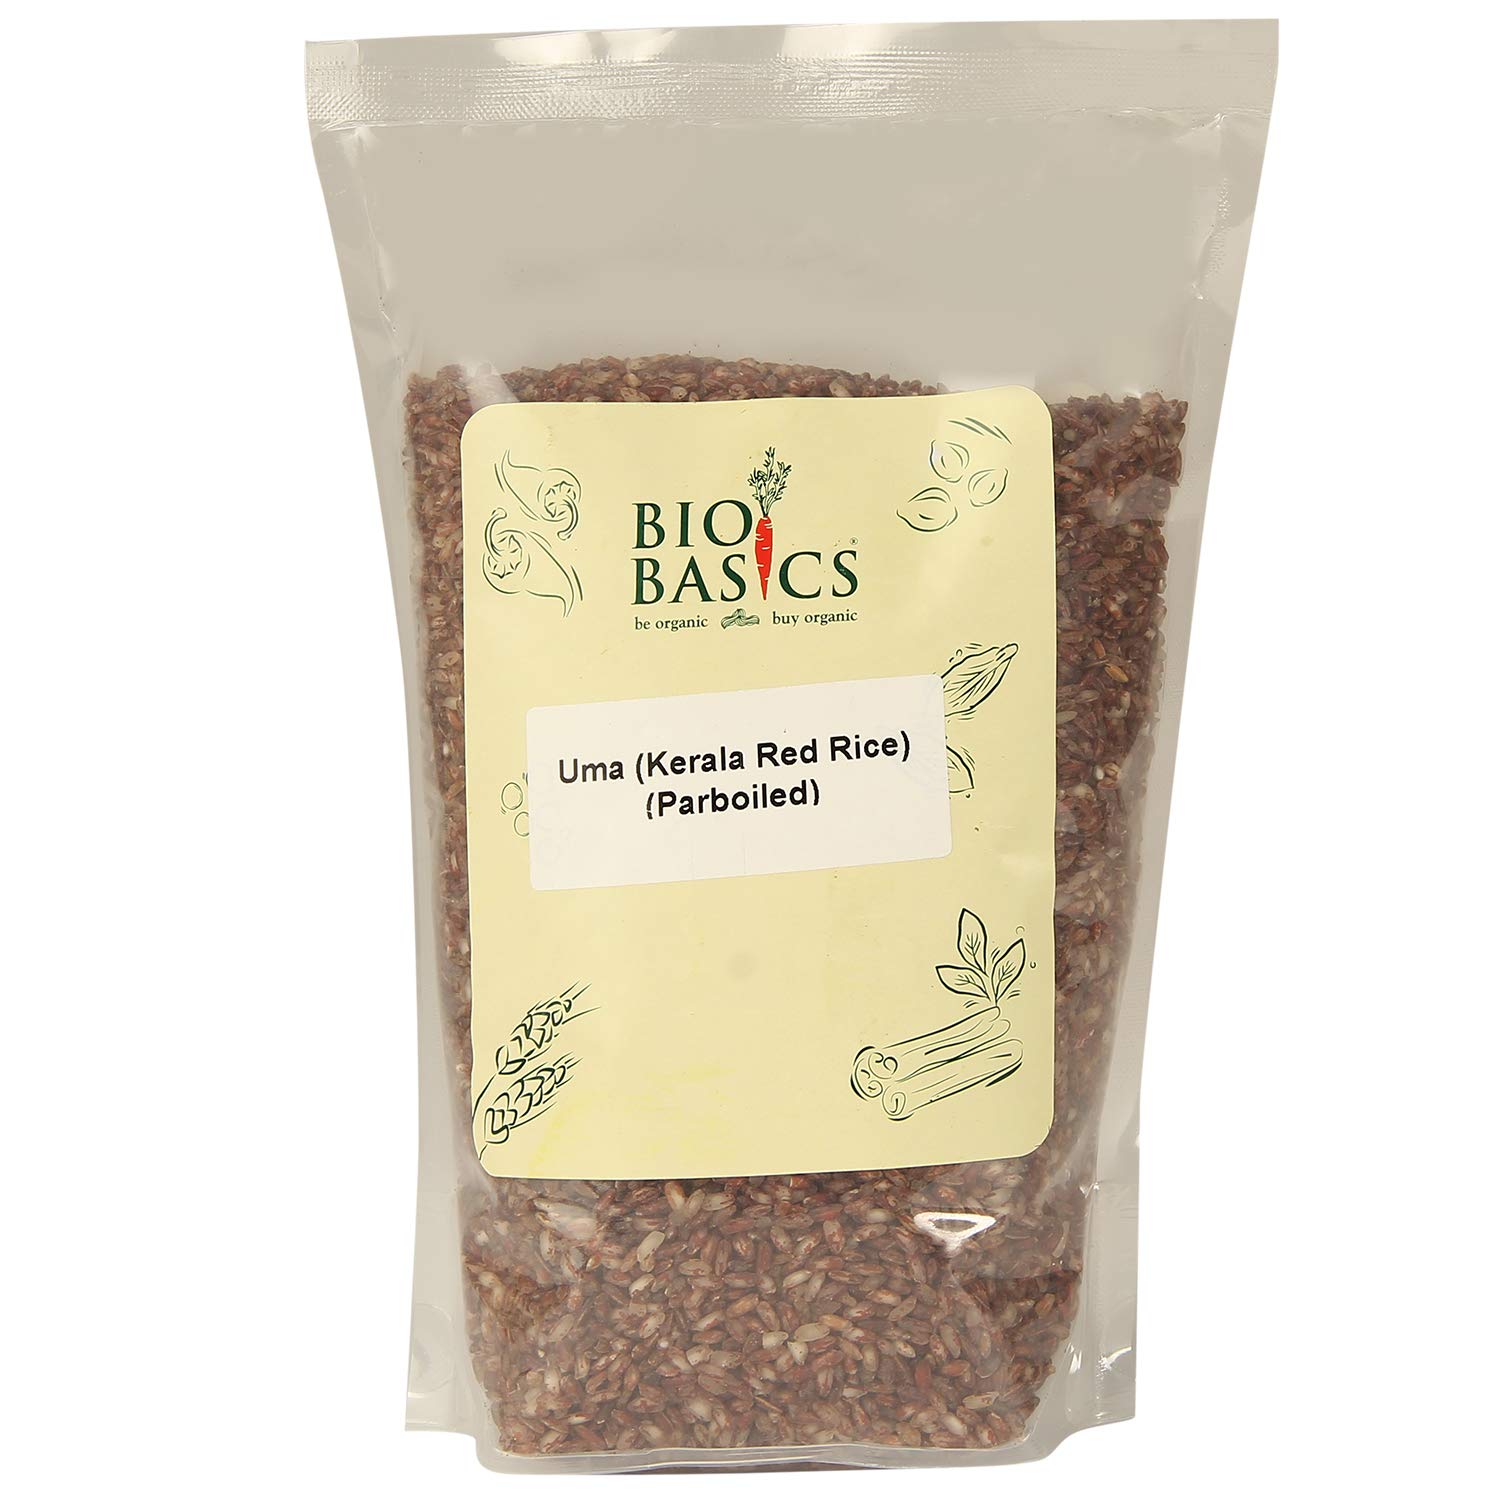 Product: Biobasics Uma Parboiled Red Rice, 1 kg